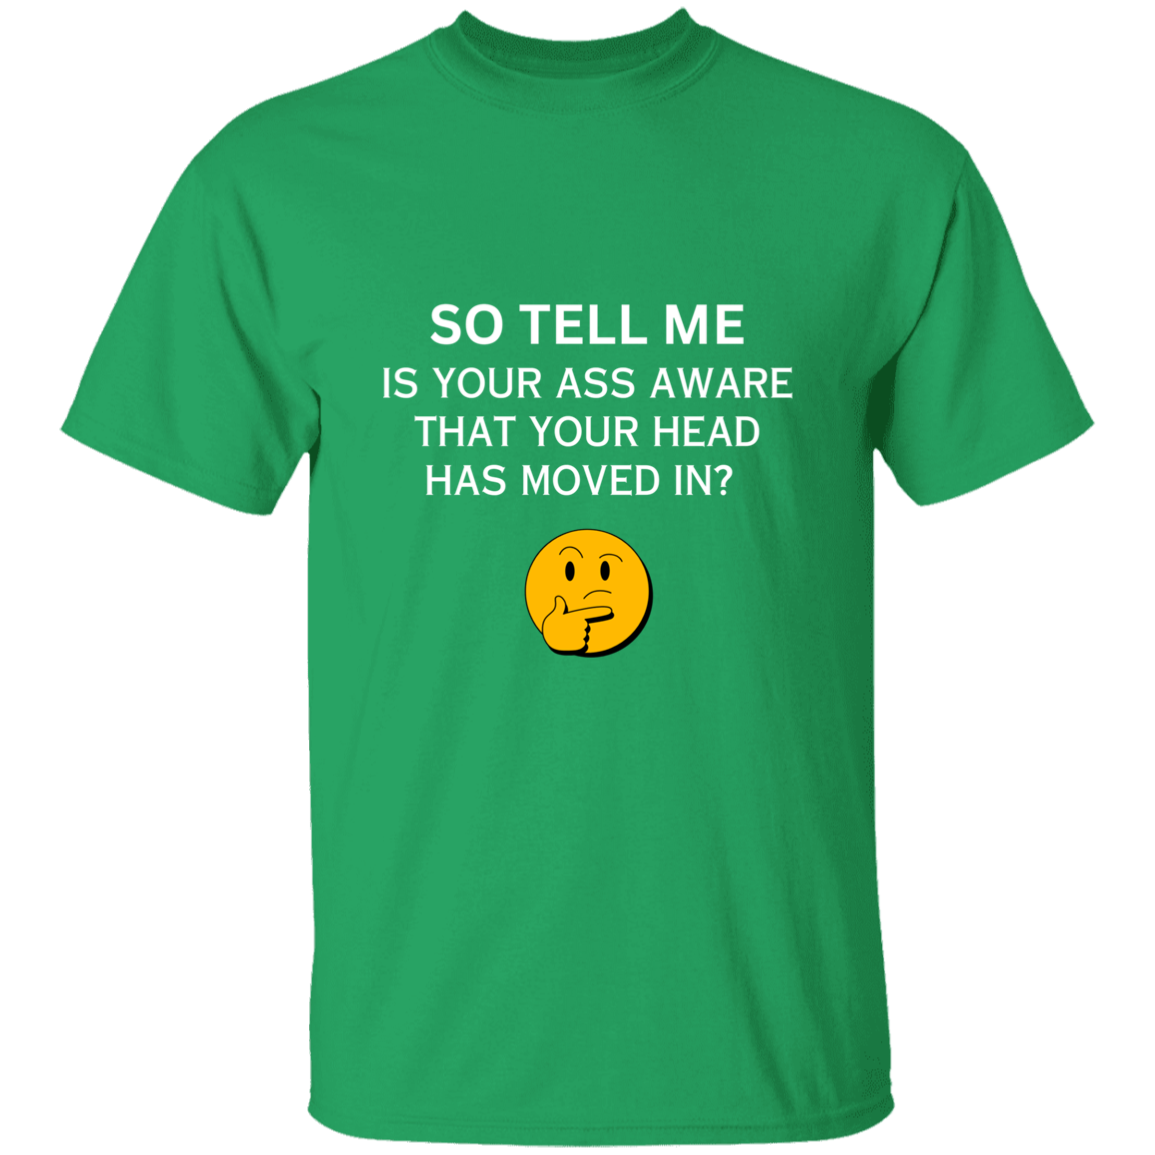 So Tell Me T-Shirt, Funny Quote Shirts, Feminist Shirt, Novelty T-shirt, Sarcastic T-shirt